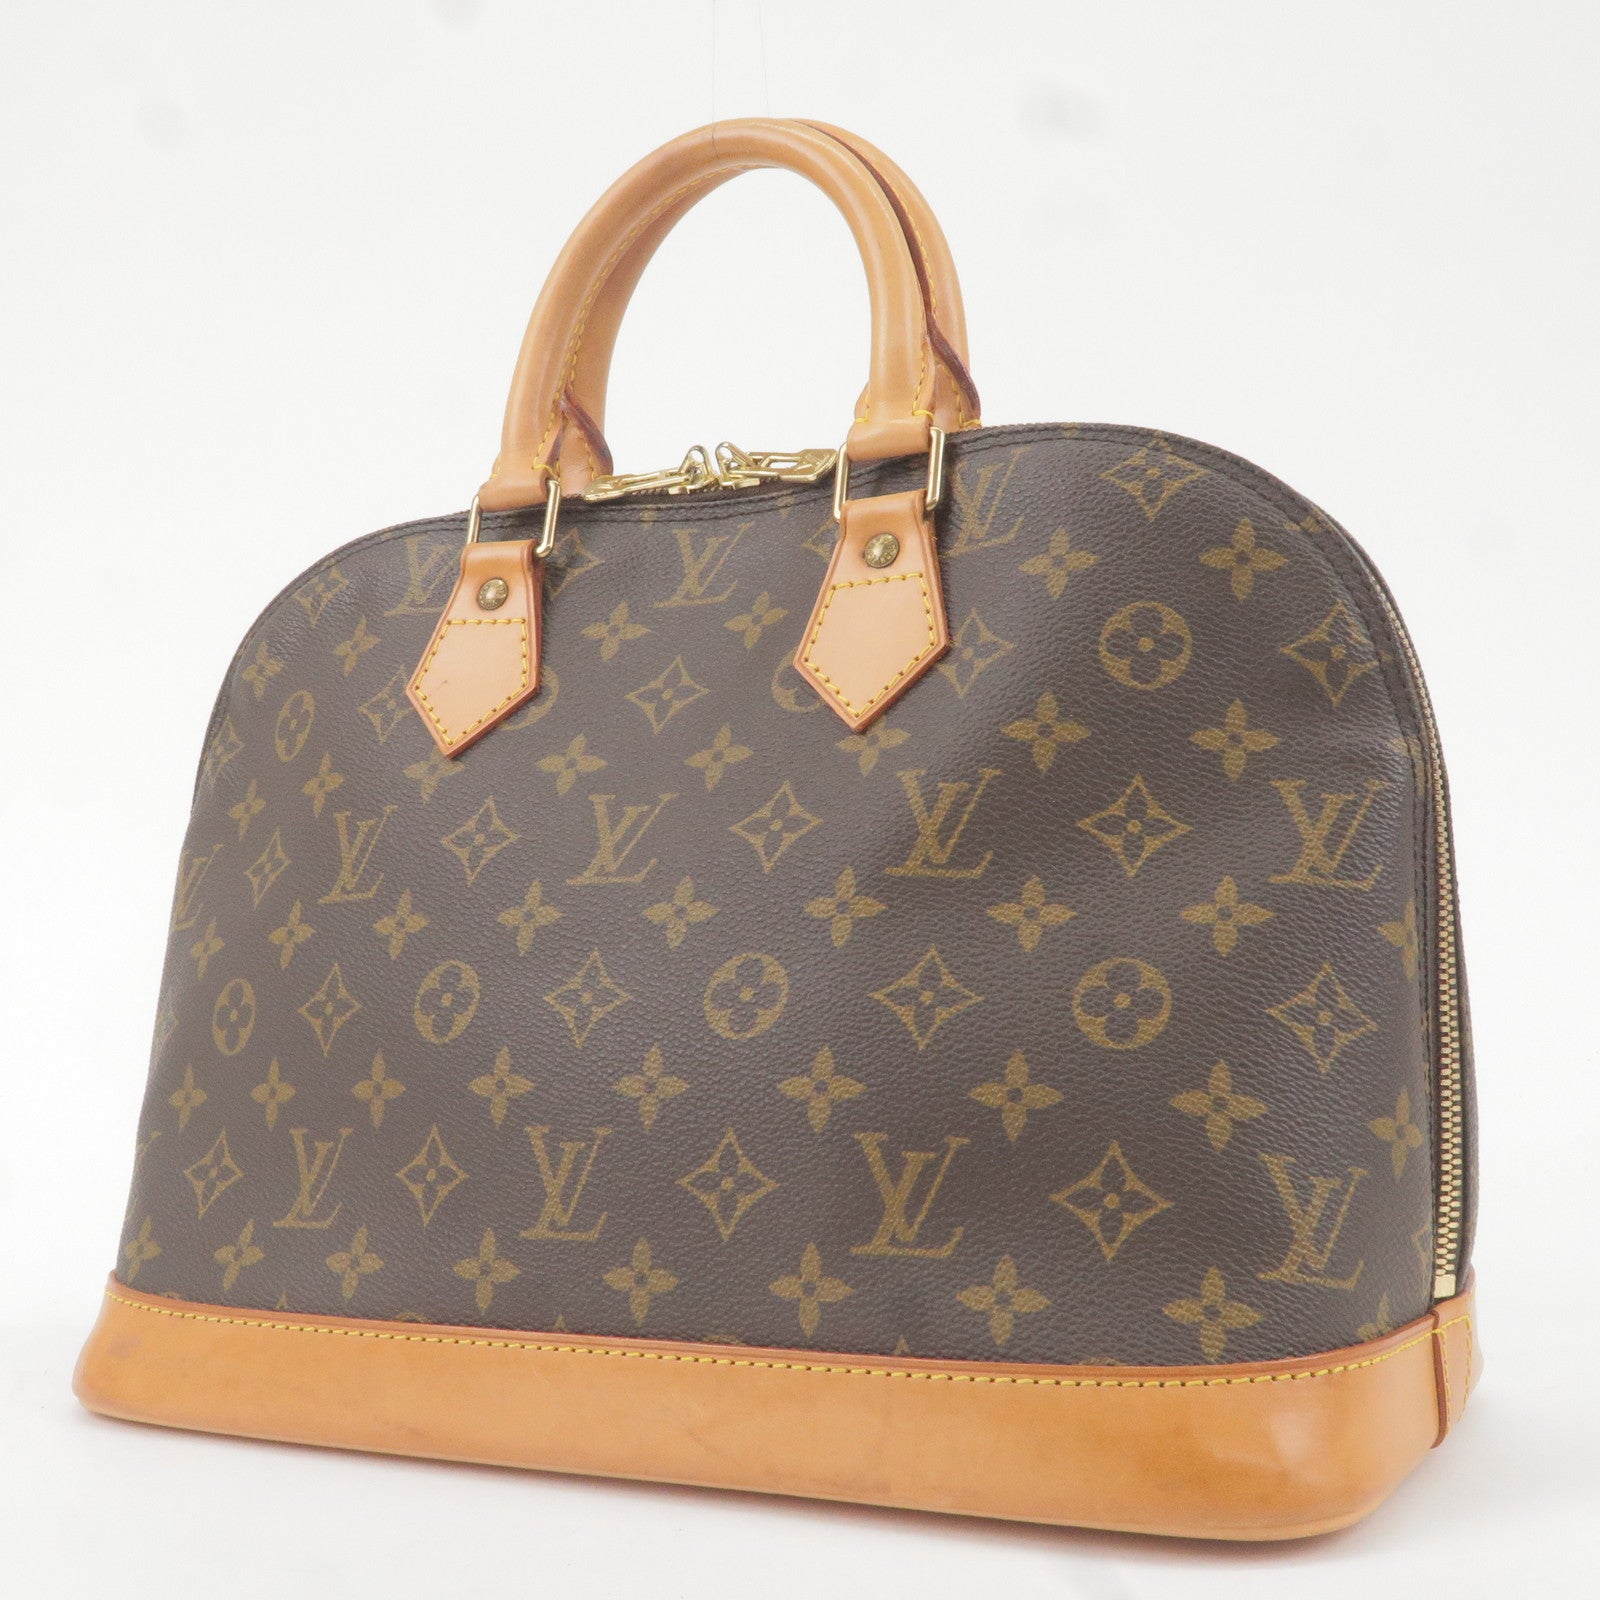 Louis Vuitton LV Berlingot Bag Charm